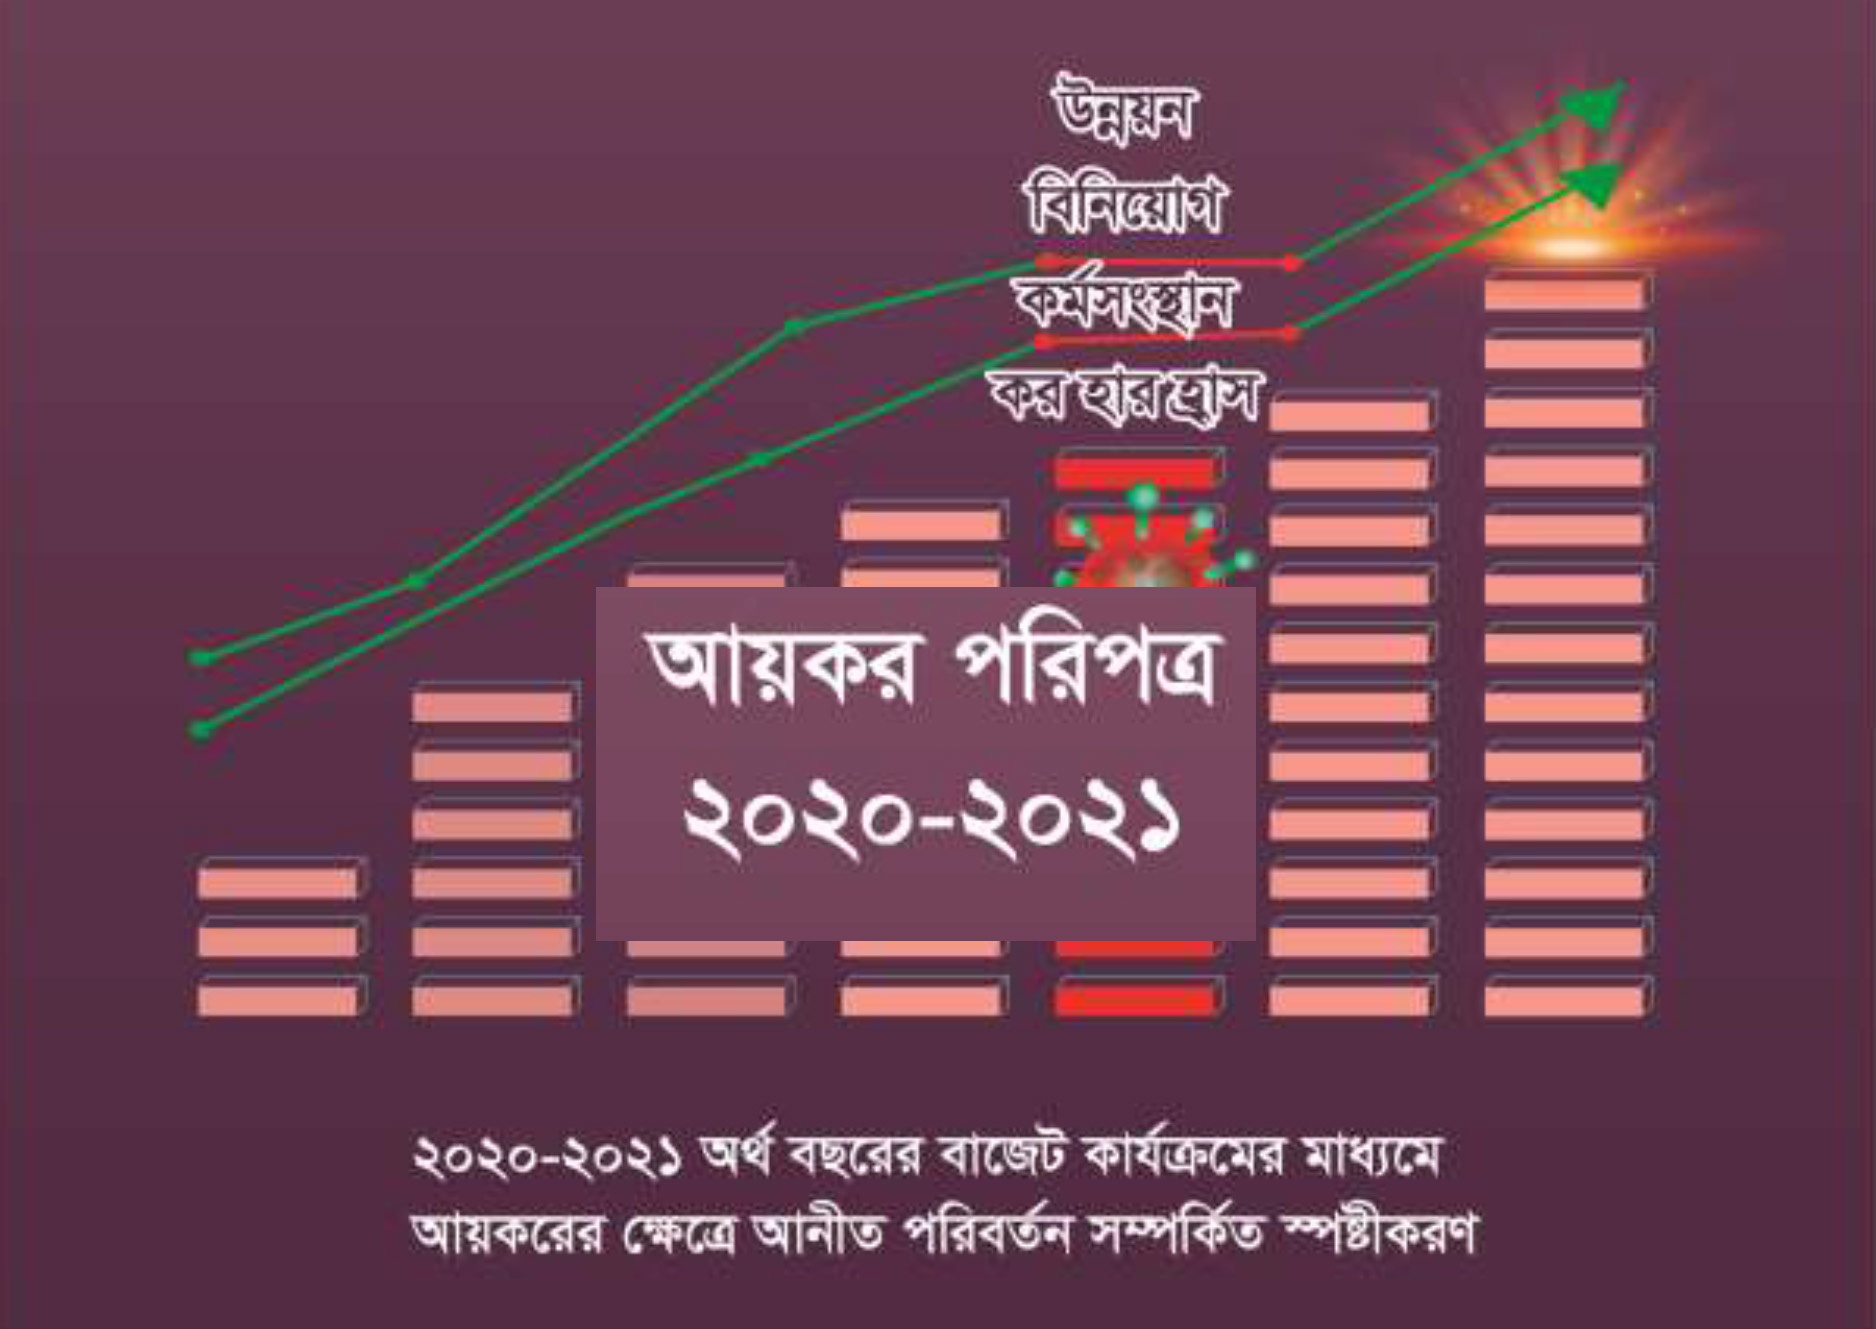 income tax paripatra 2020-2021 bd